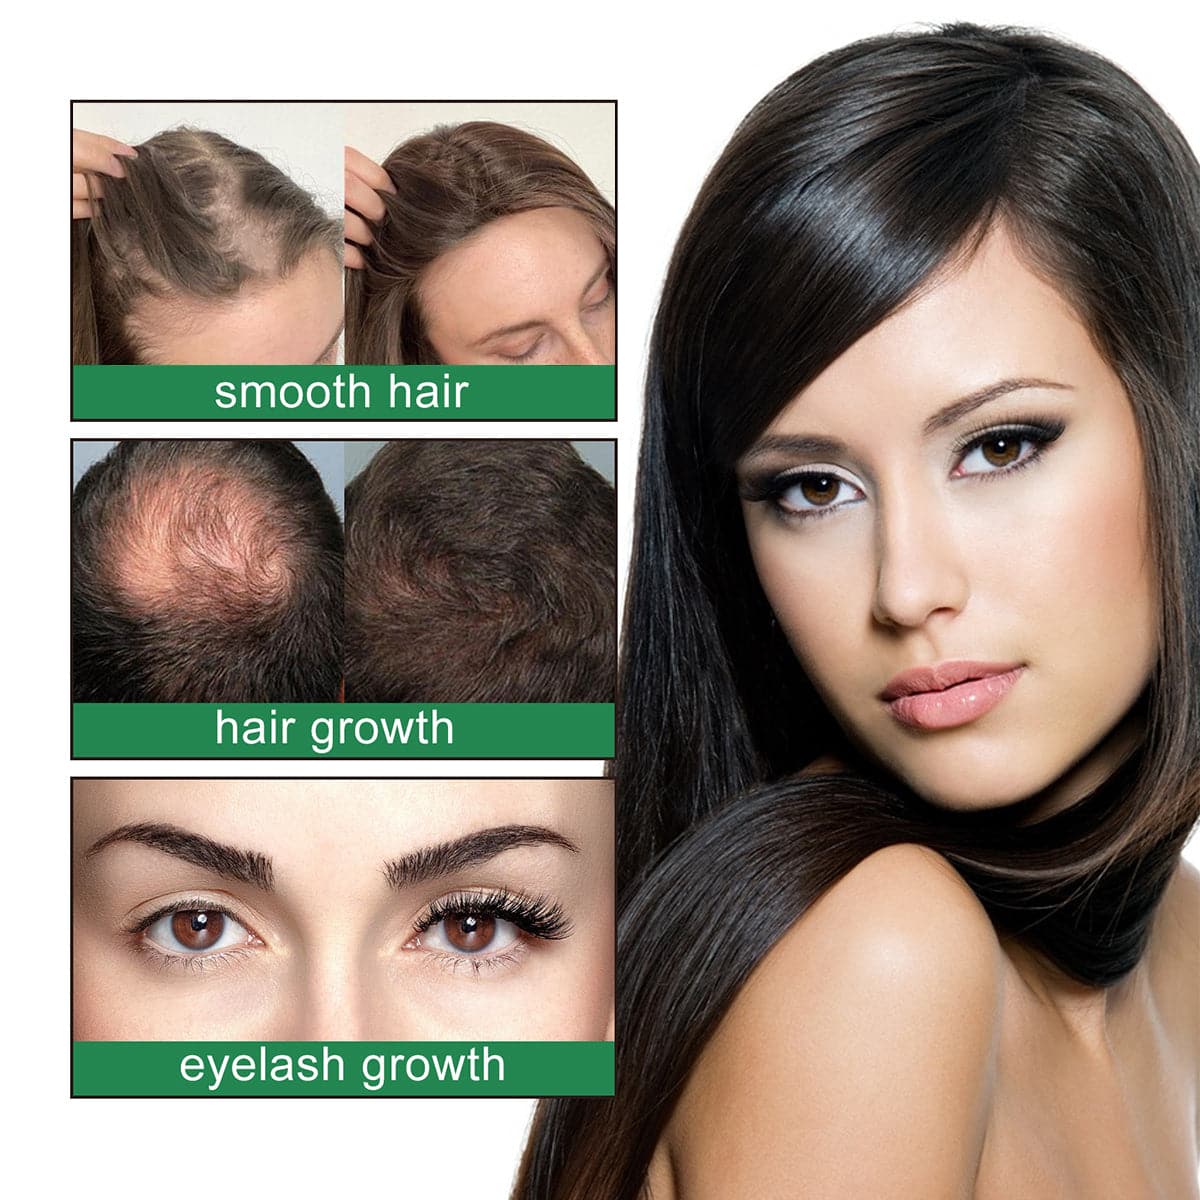 RADIIQ Organic Castor Oil Hair Growth Serum MAX